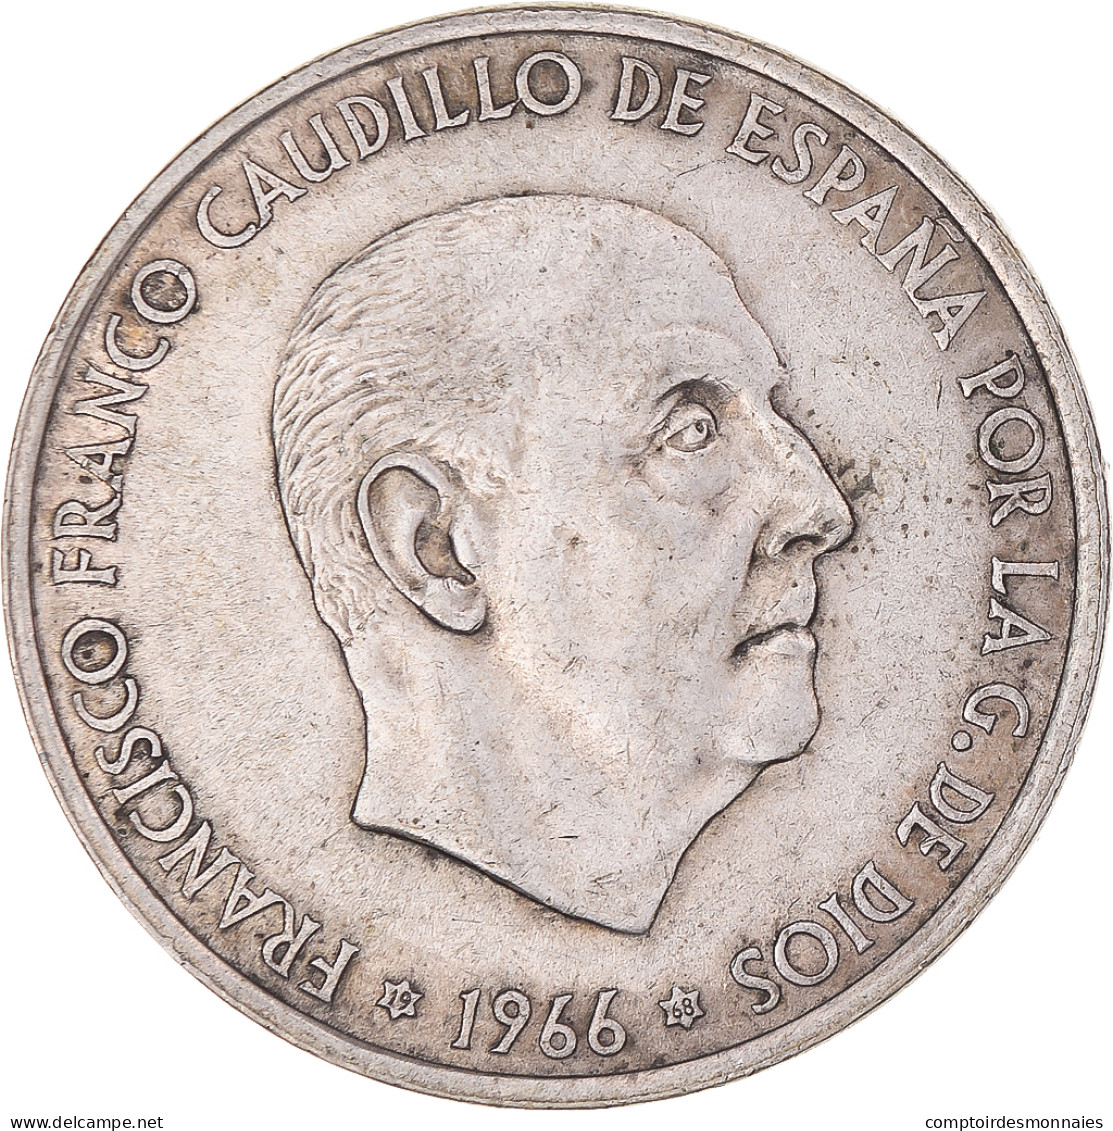 Monnaie, Espagne, Caudillo And Regent, 100 Pesetas, 1966 (68), Madrid, TTB+ - 100 Peseta